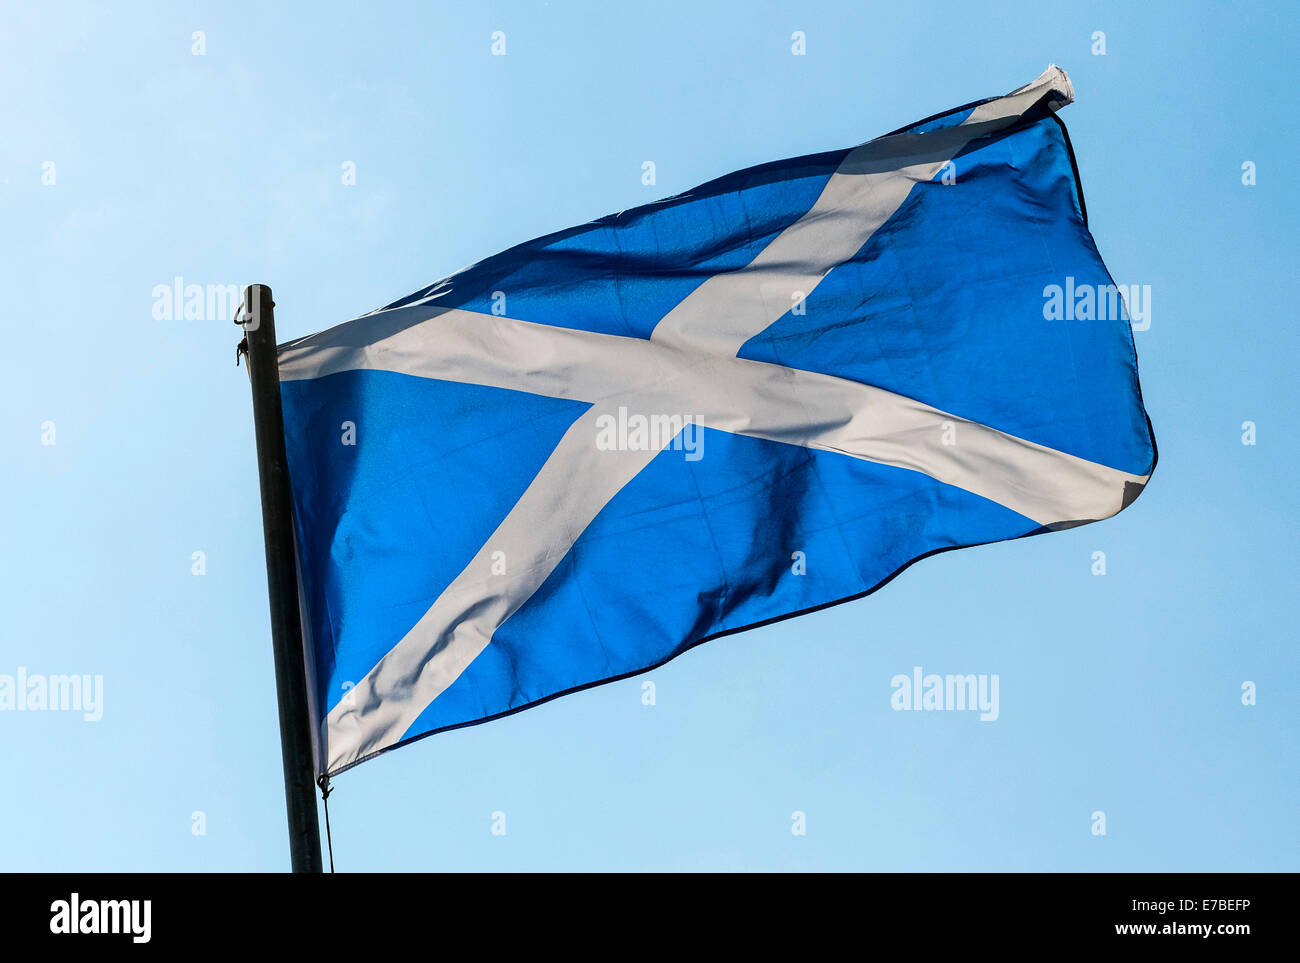 The Saltire, Scottish flag, flying against a blue sky, Oban, Scotland, United Kingdom Stock Photo